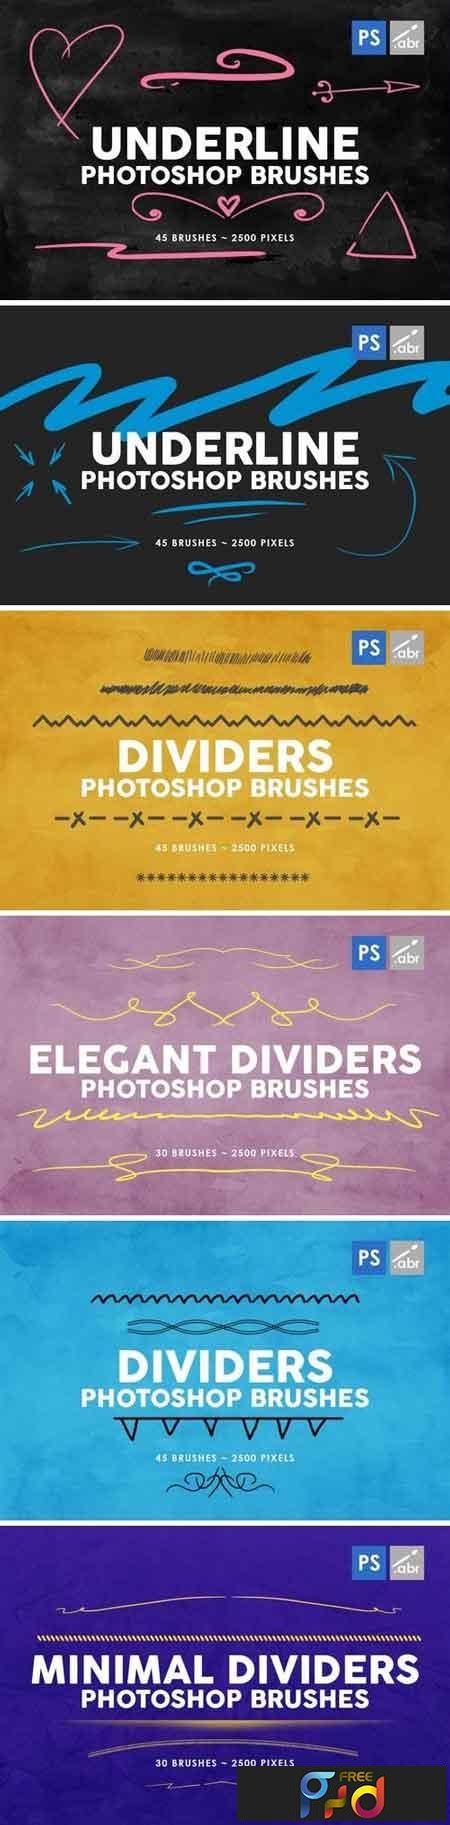 Dividers and Underline Photoshop Stamp